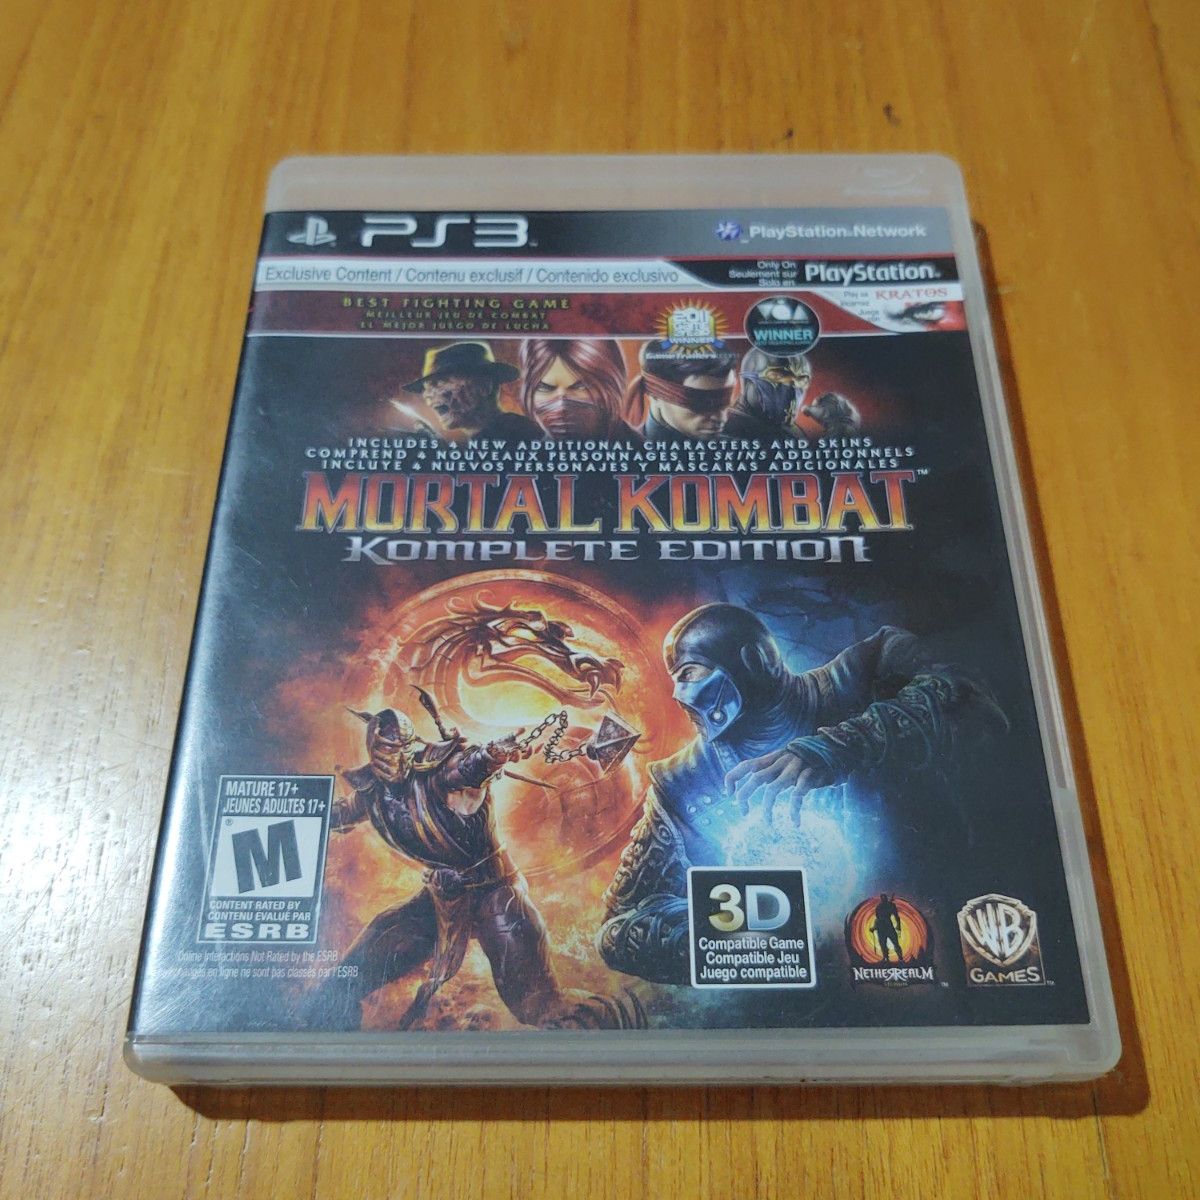 Jogo Mortal Kombat 9 - PS3